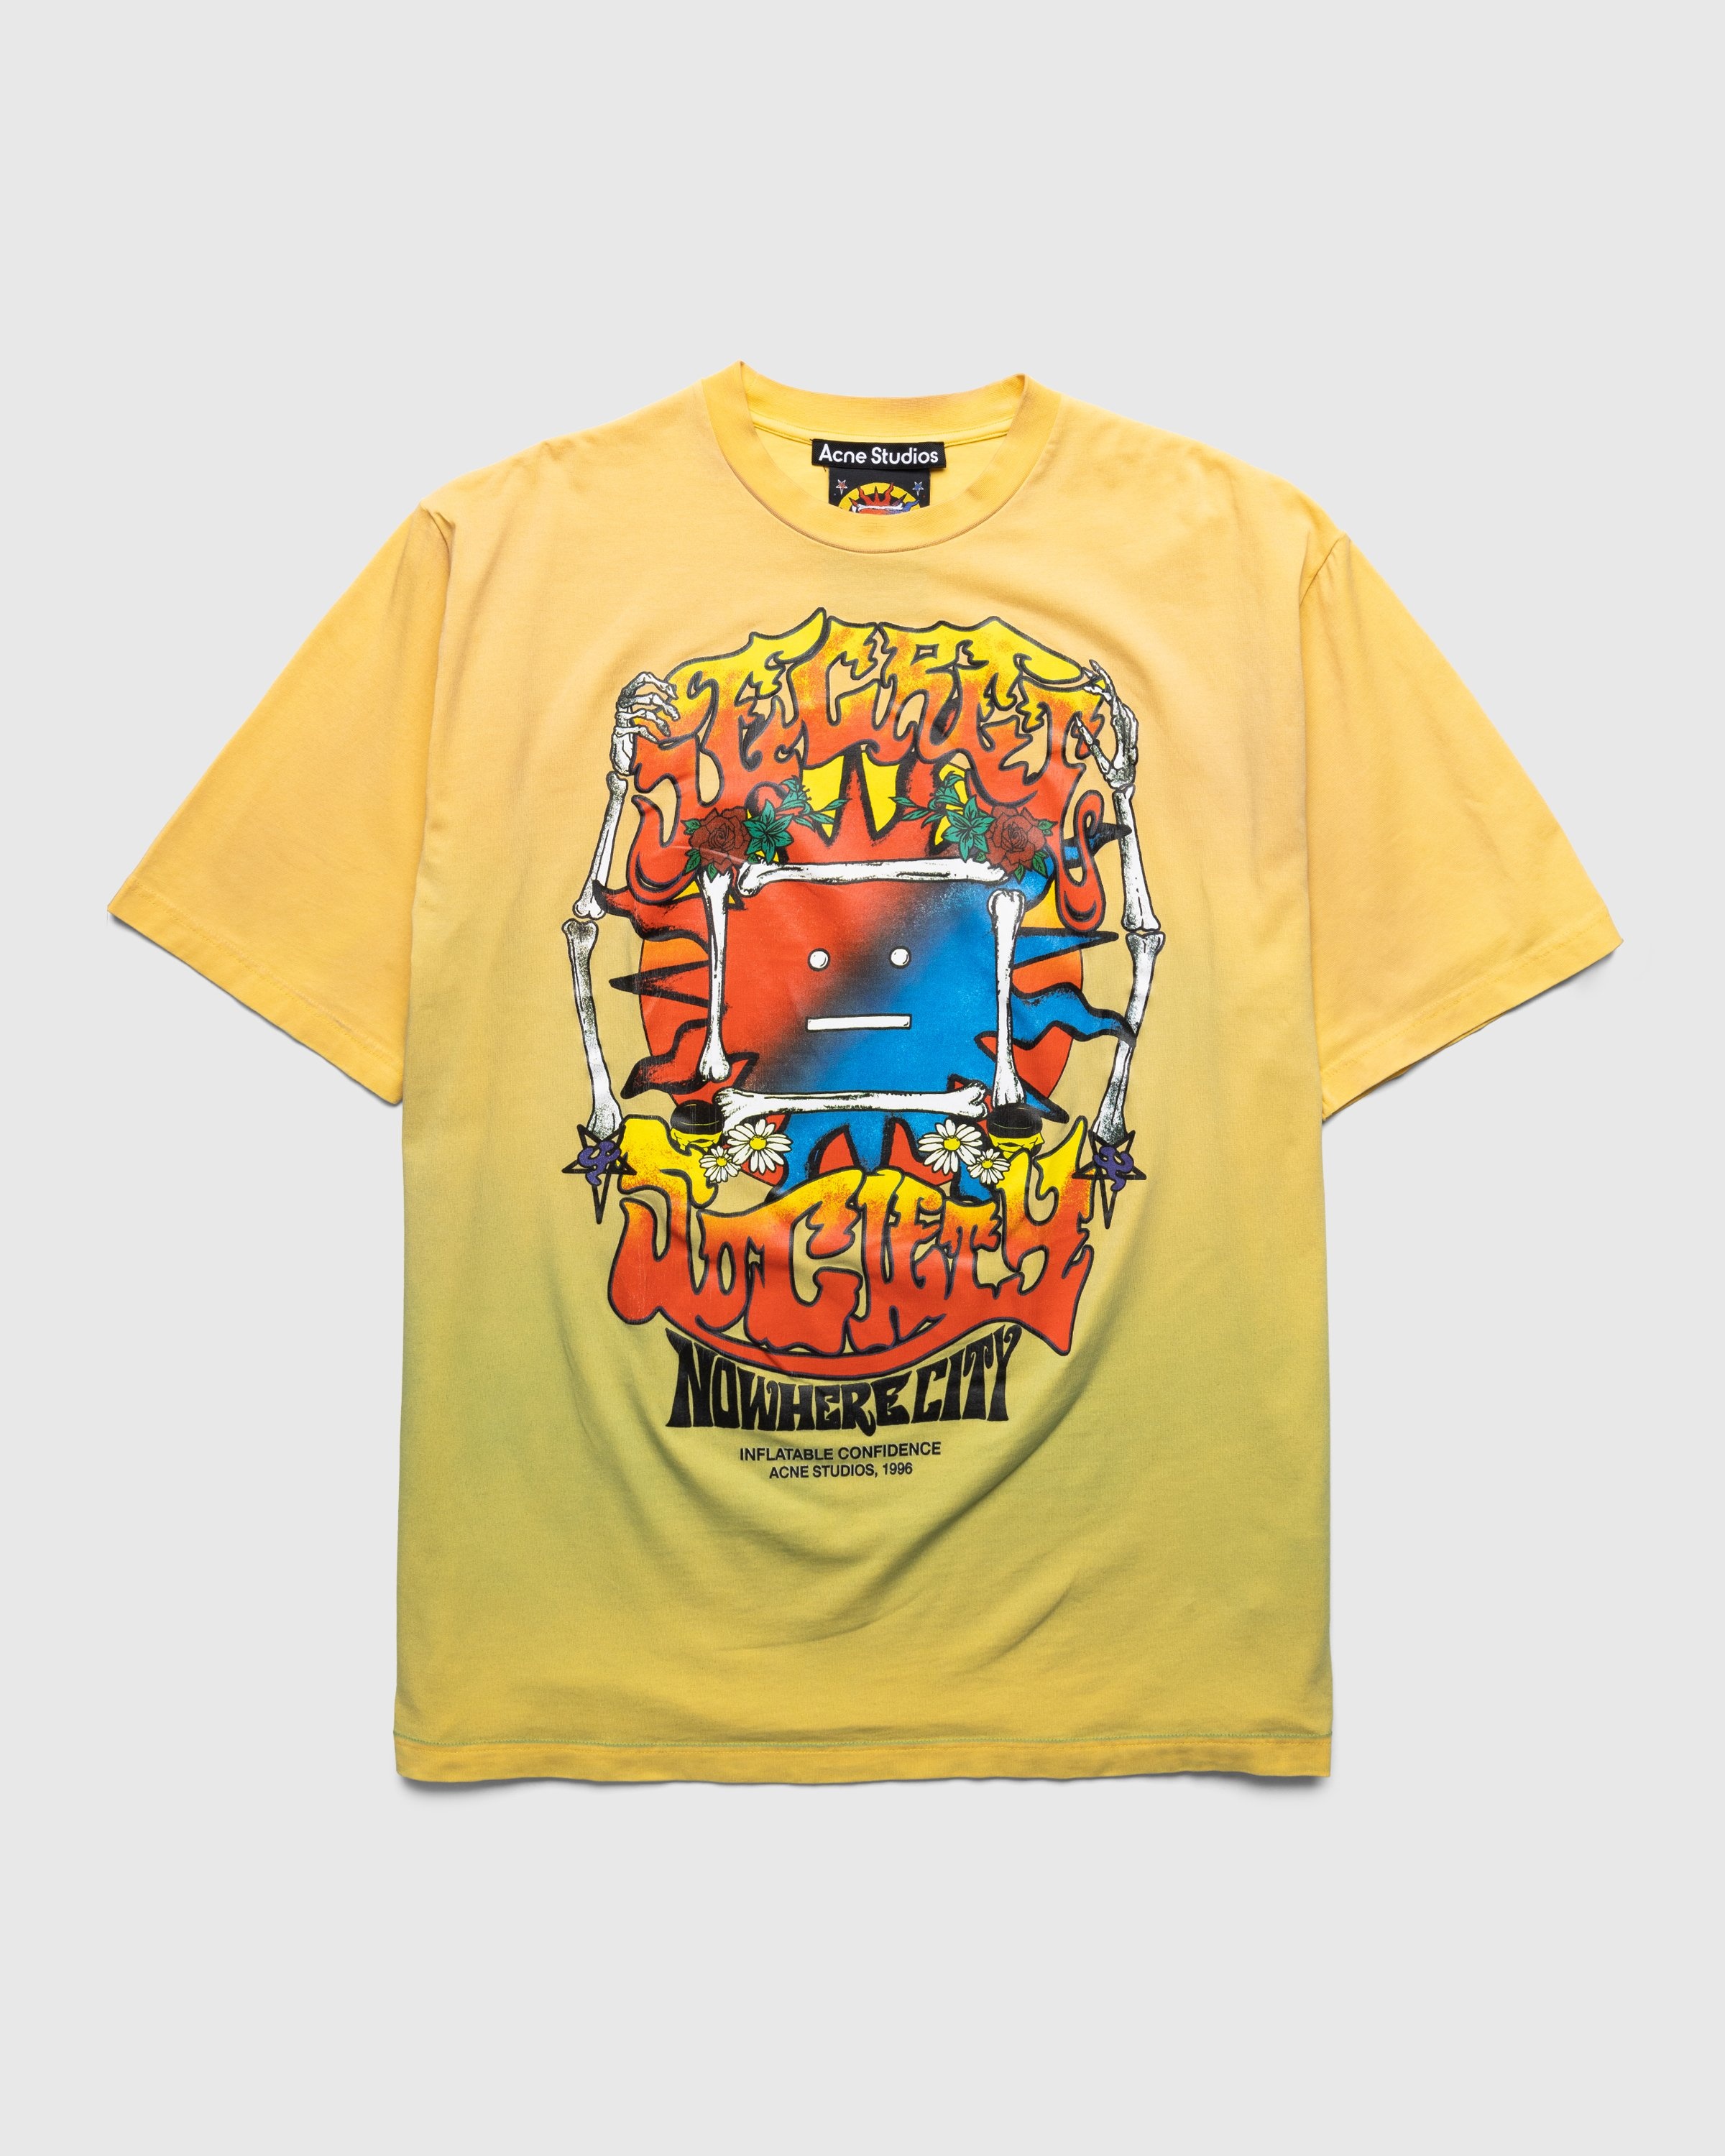 Acne Studios – Cracked Print T-Shirt Multi - Tops - Multi - Image 1